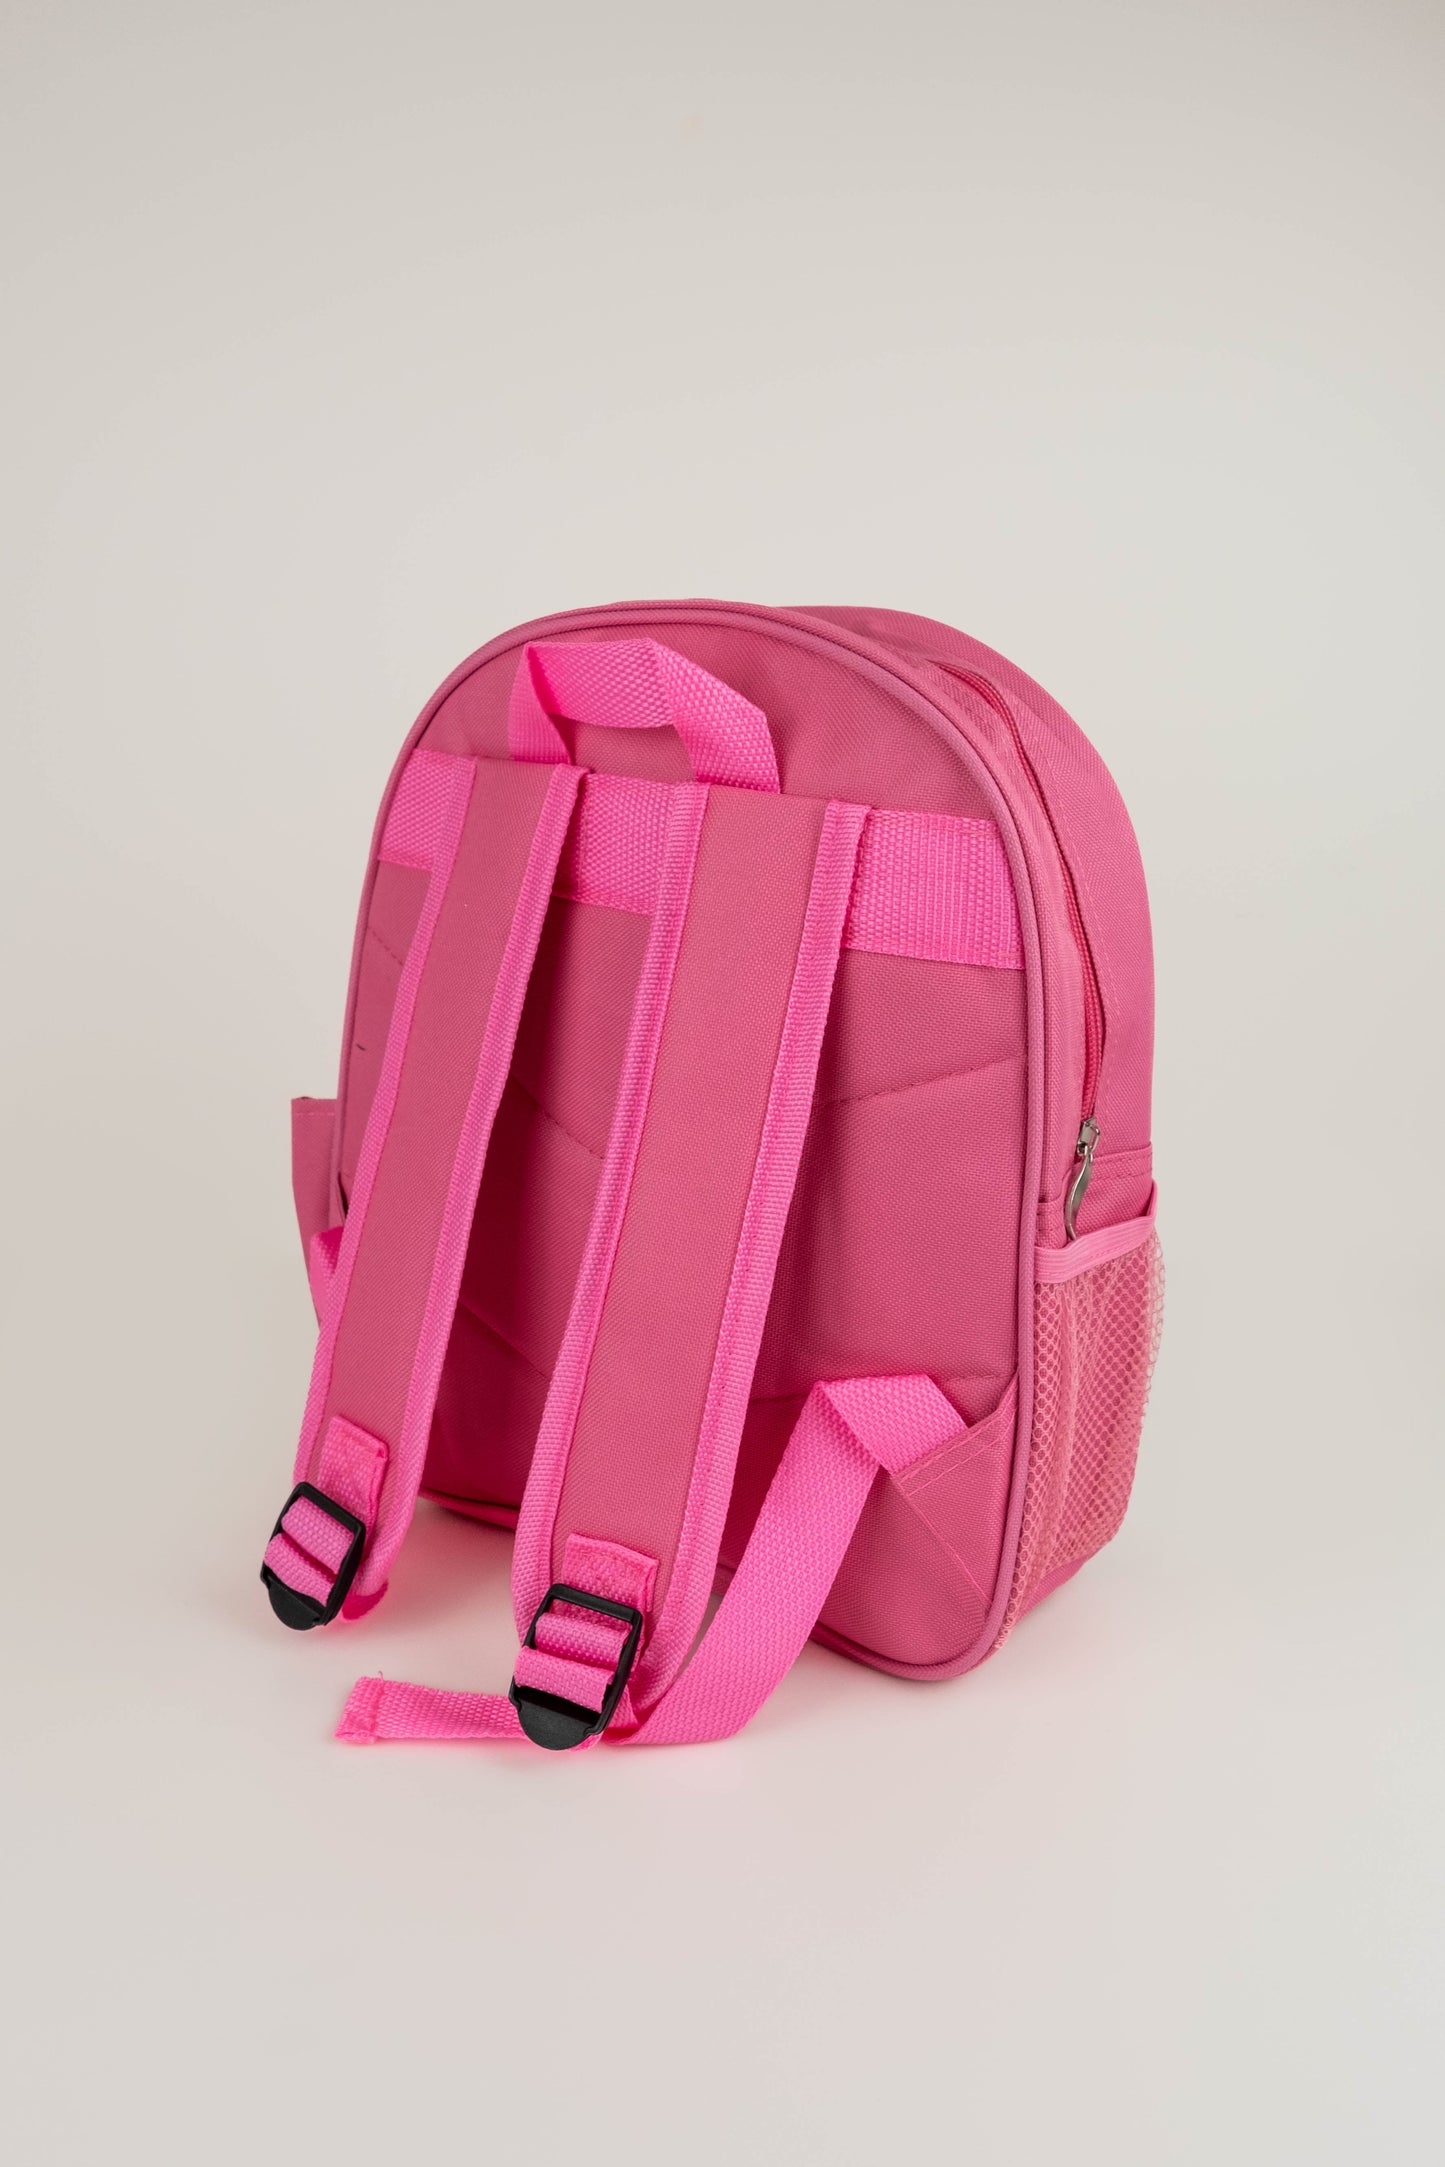 Children’s Personalised Backpack - Gaming Design - Blue